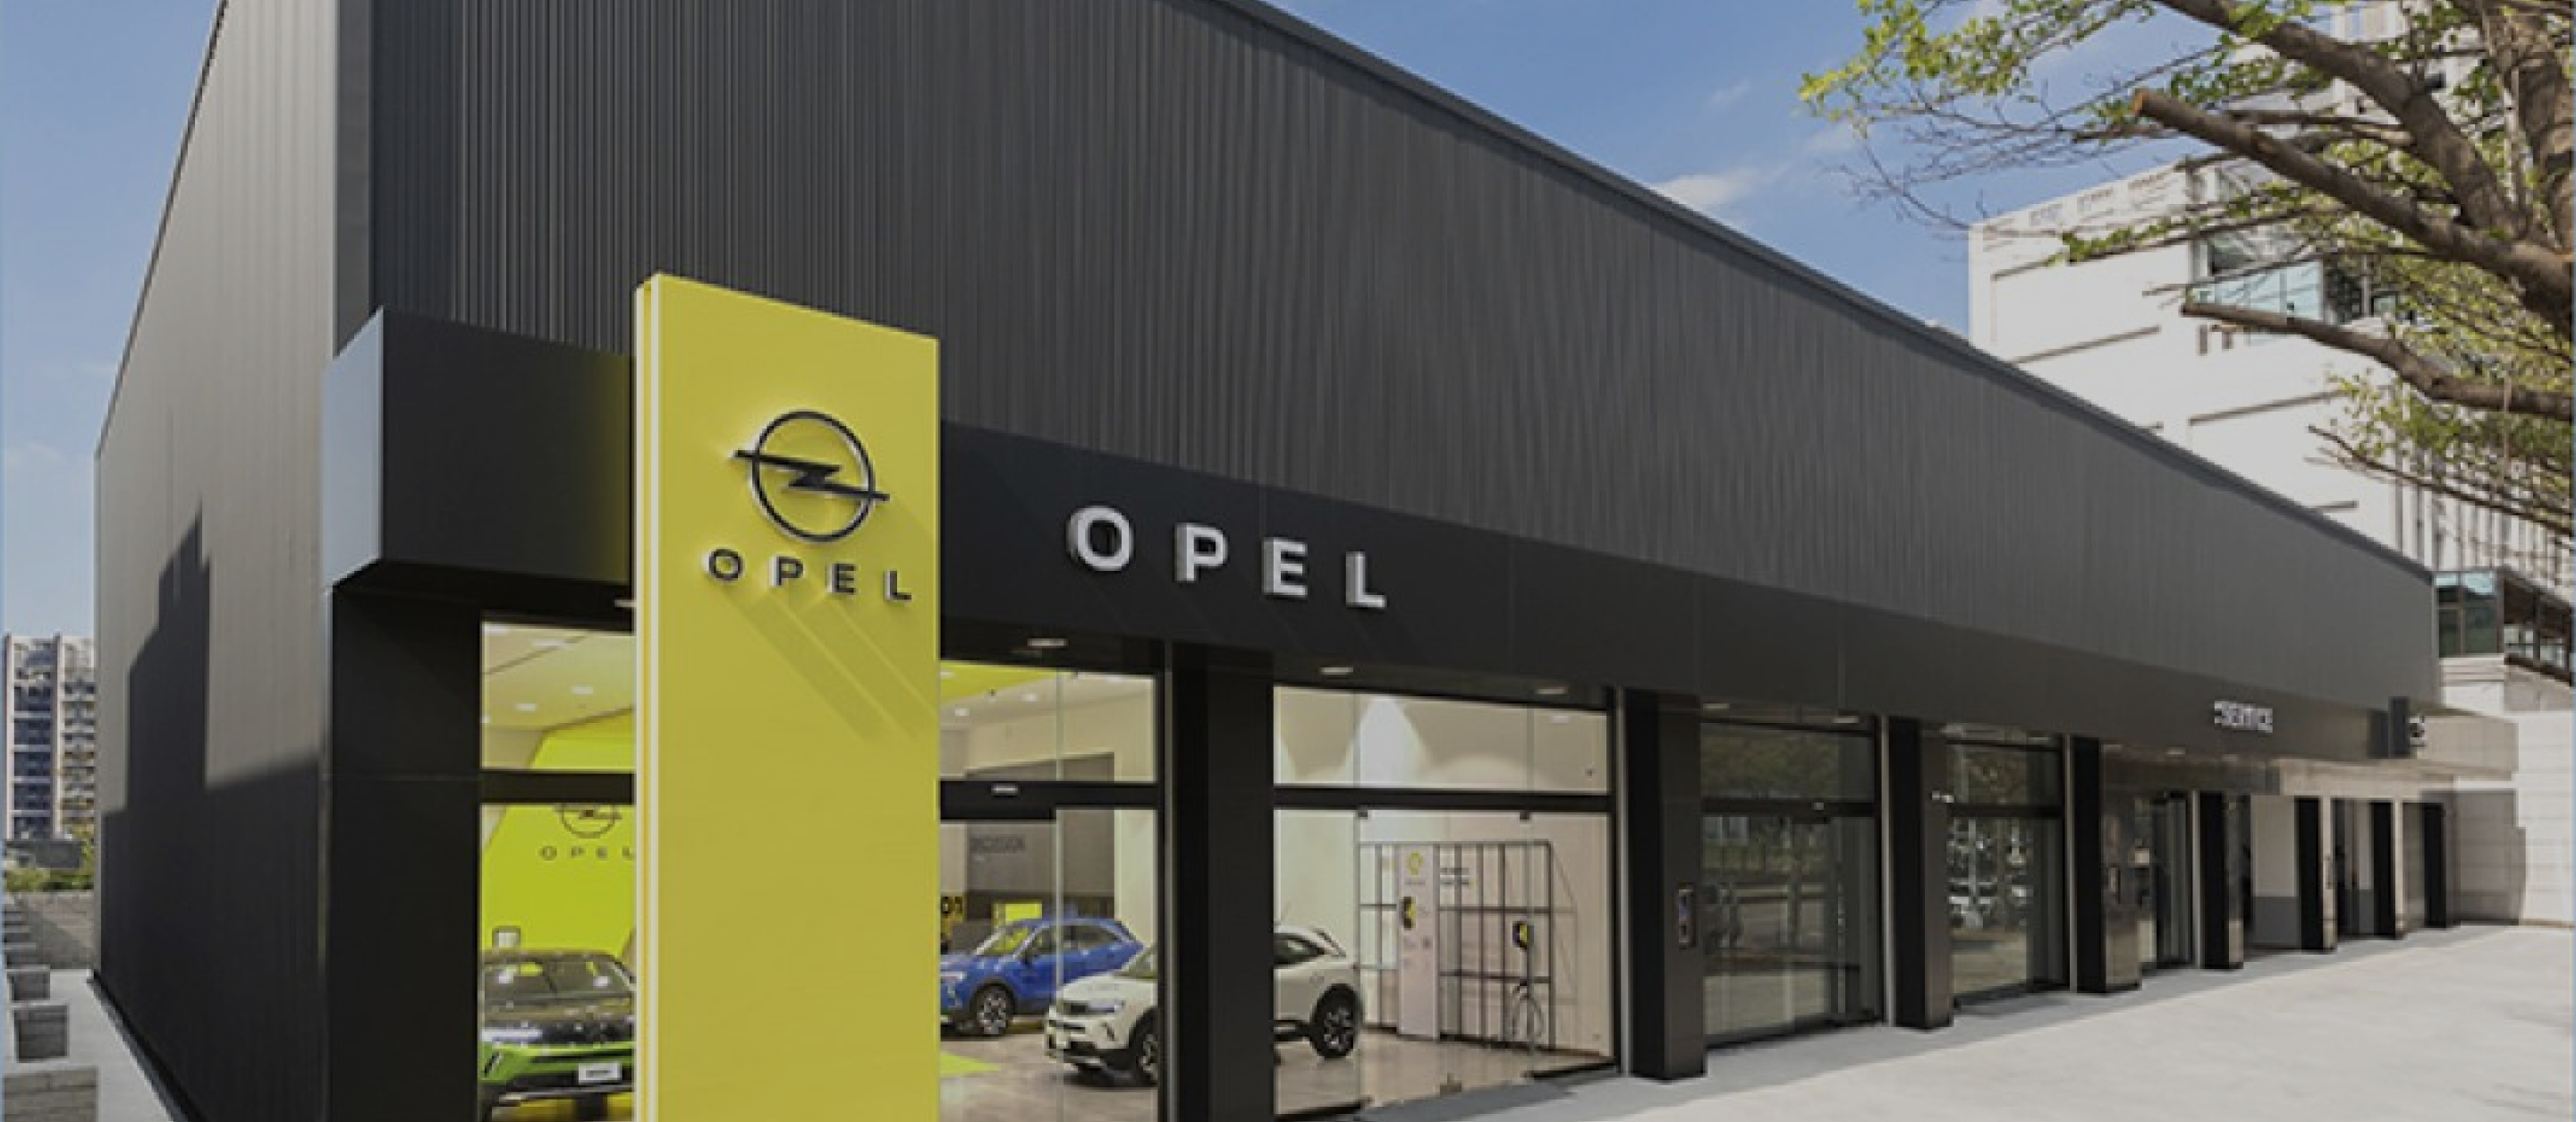 Opel全車系甲乙丙式車體險